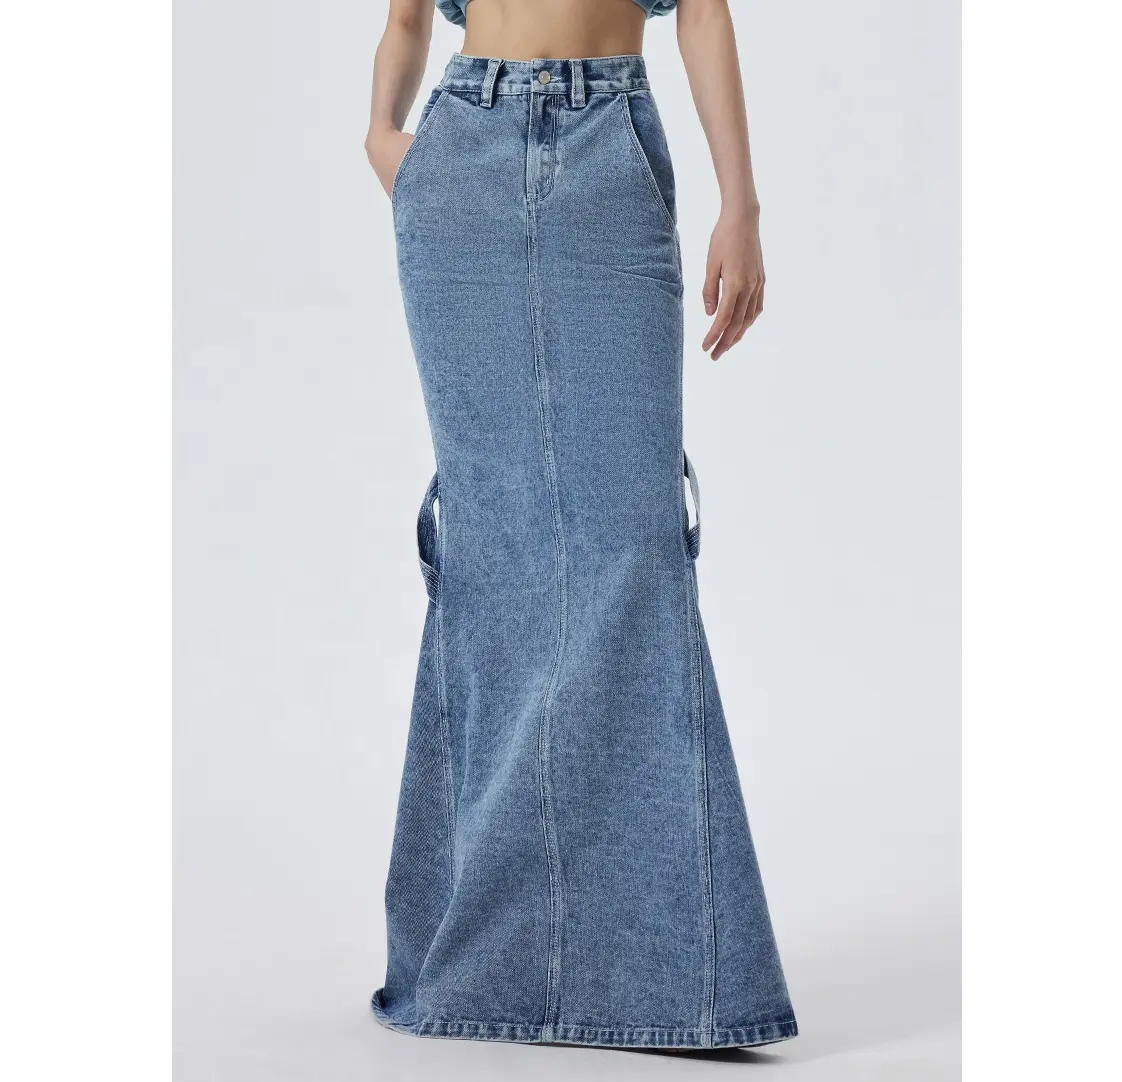 Custom Women's Pockets Denim Dress Mermaid Hem Denim Long Skirts Ladies Blue Bodycon Jean Dress